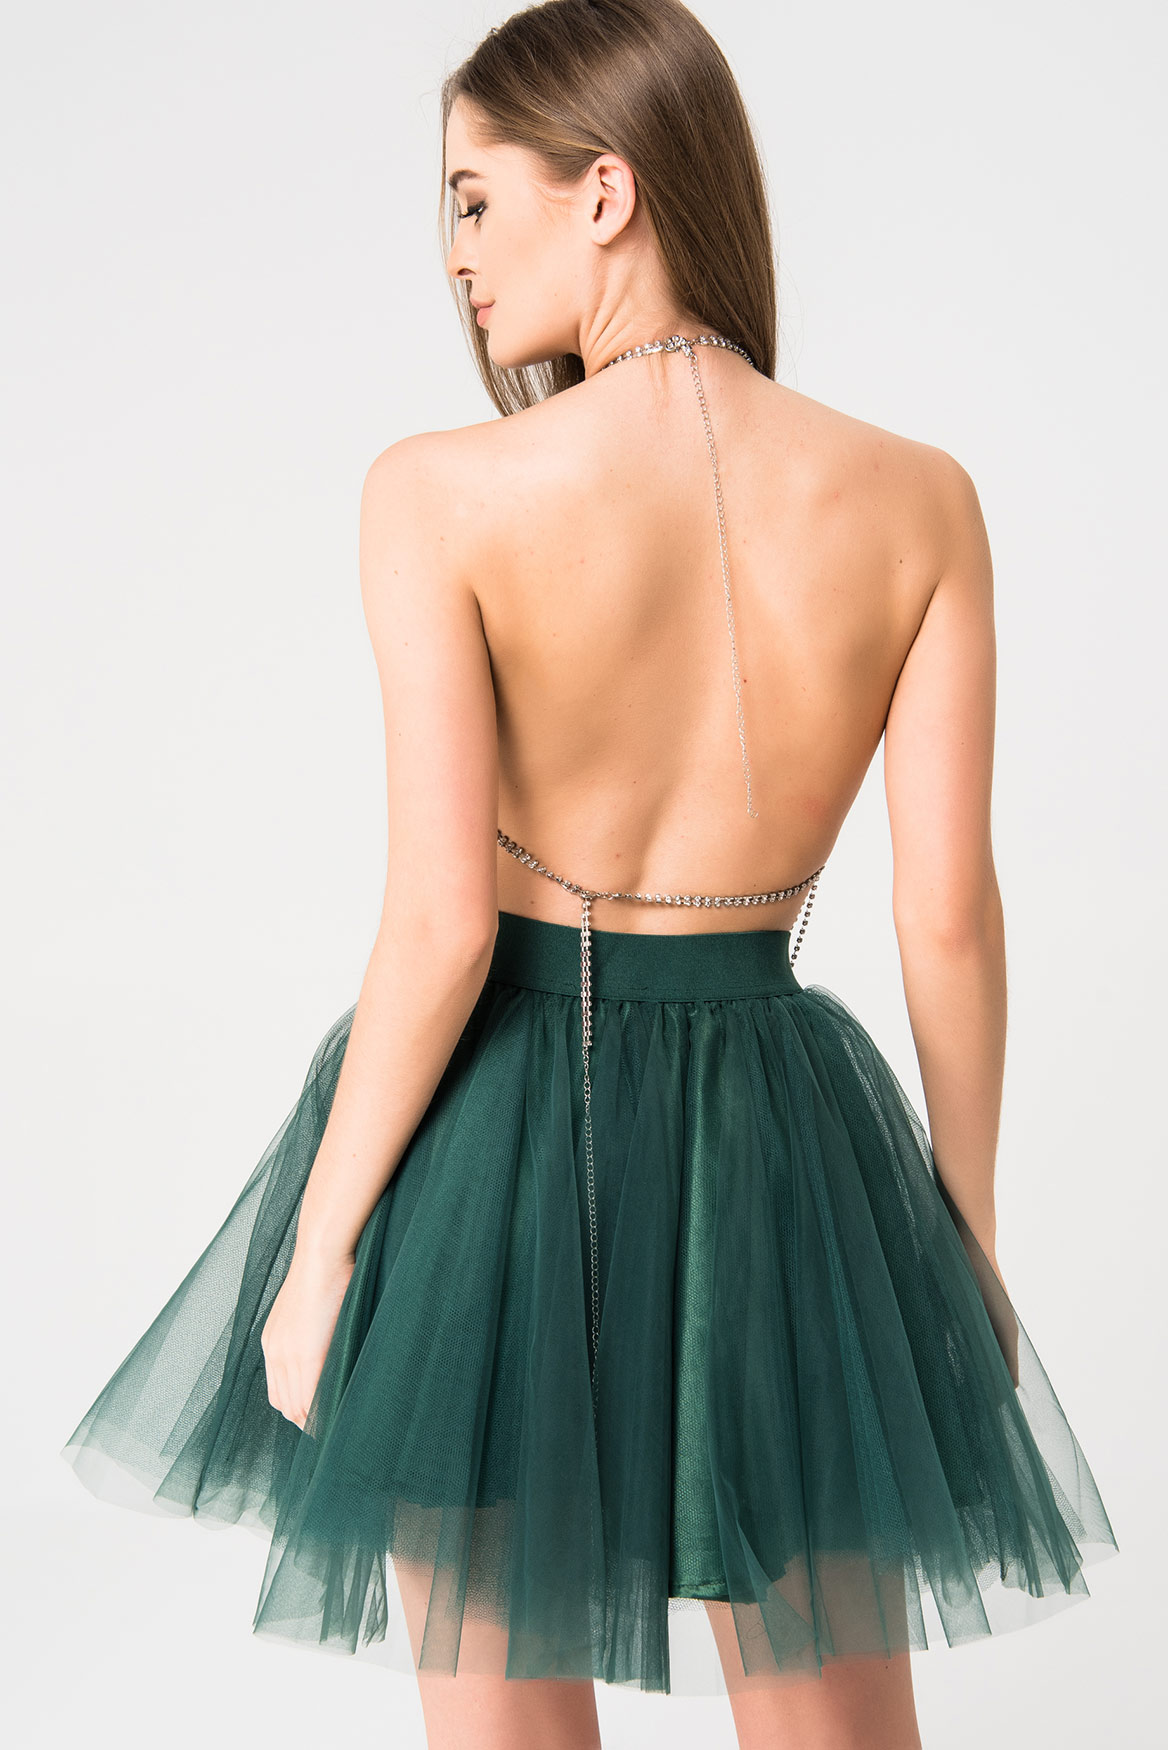 Wholesale Green Ballerina Skirt